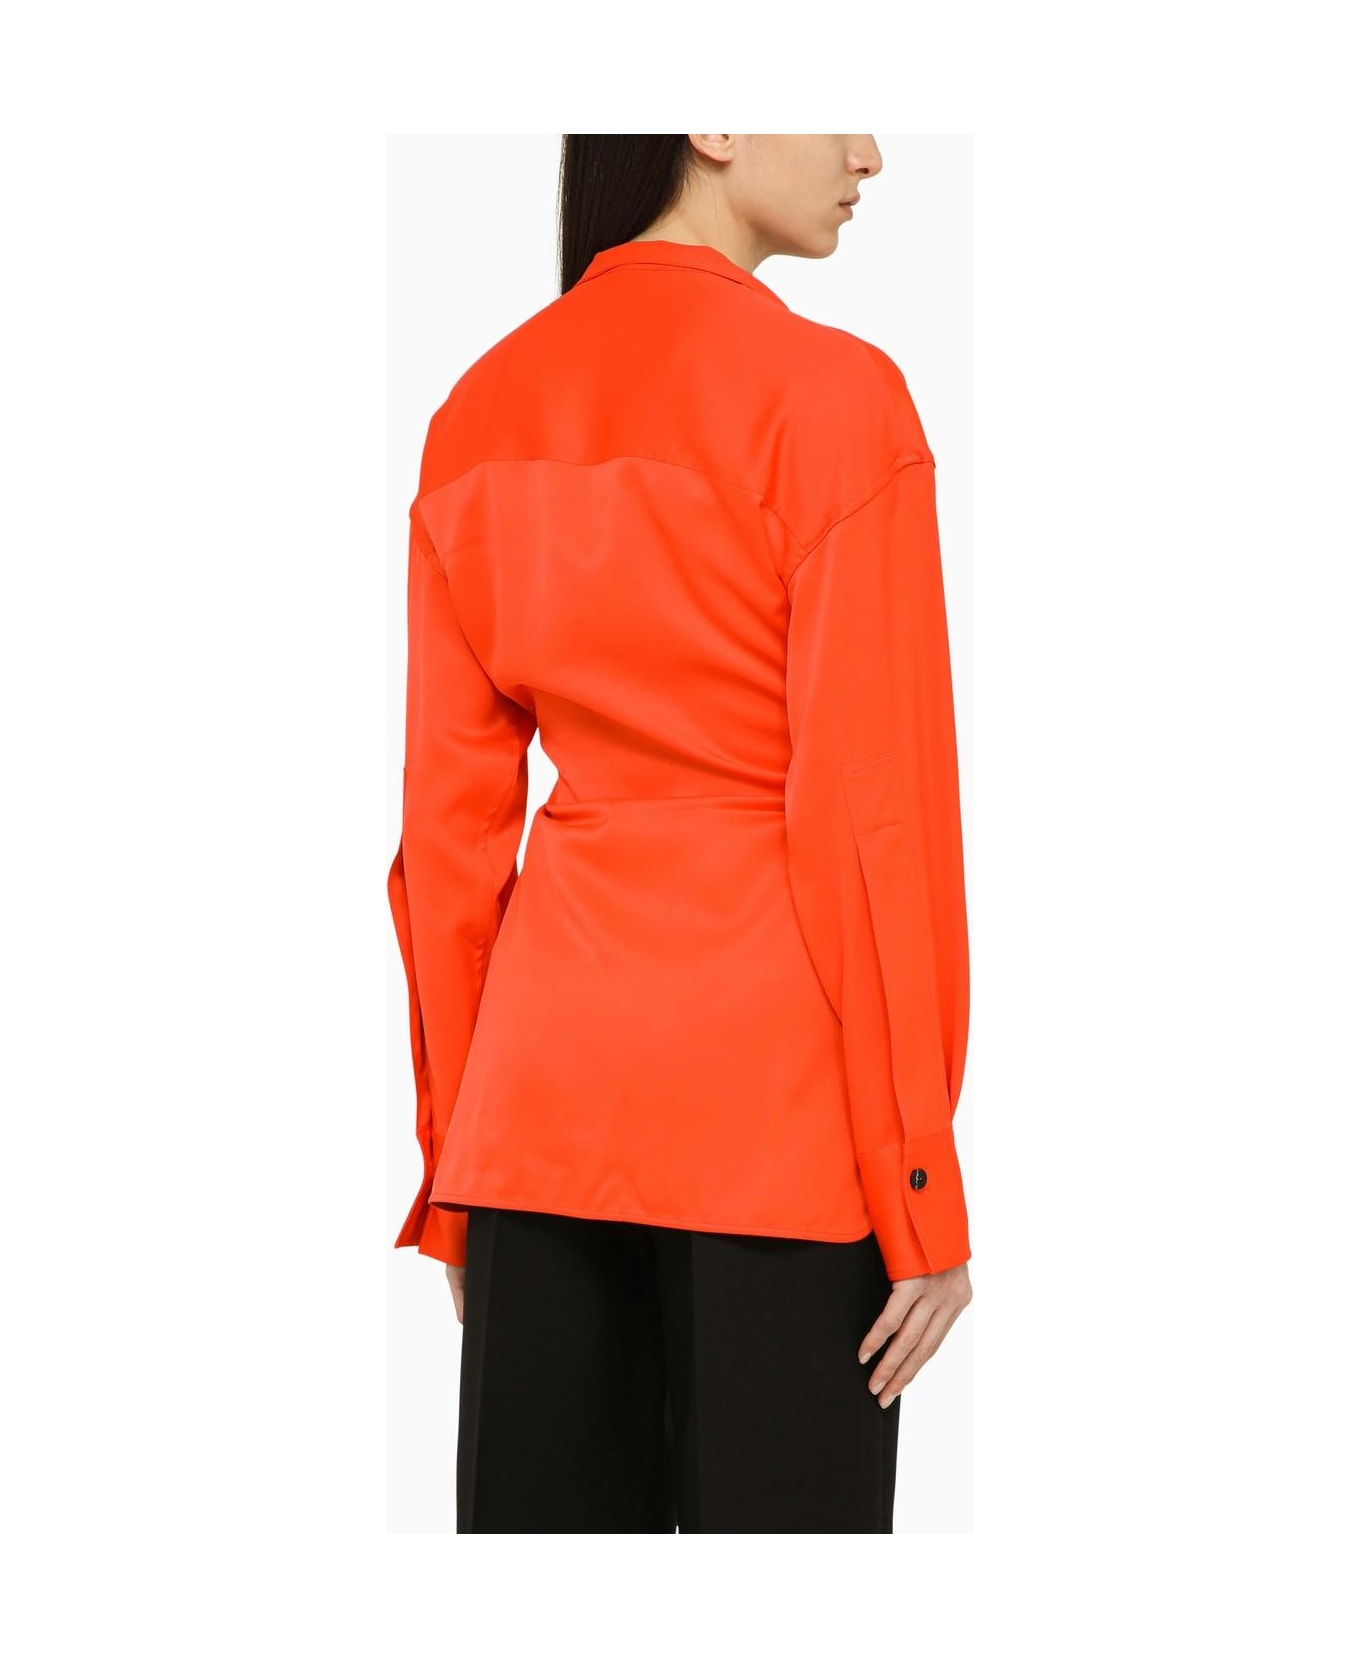 Ferragamo Shirt With Asymmetrical Closure Orange - Orange